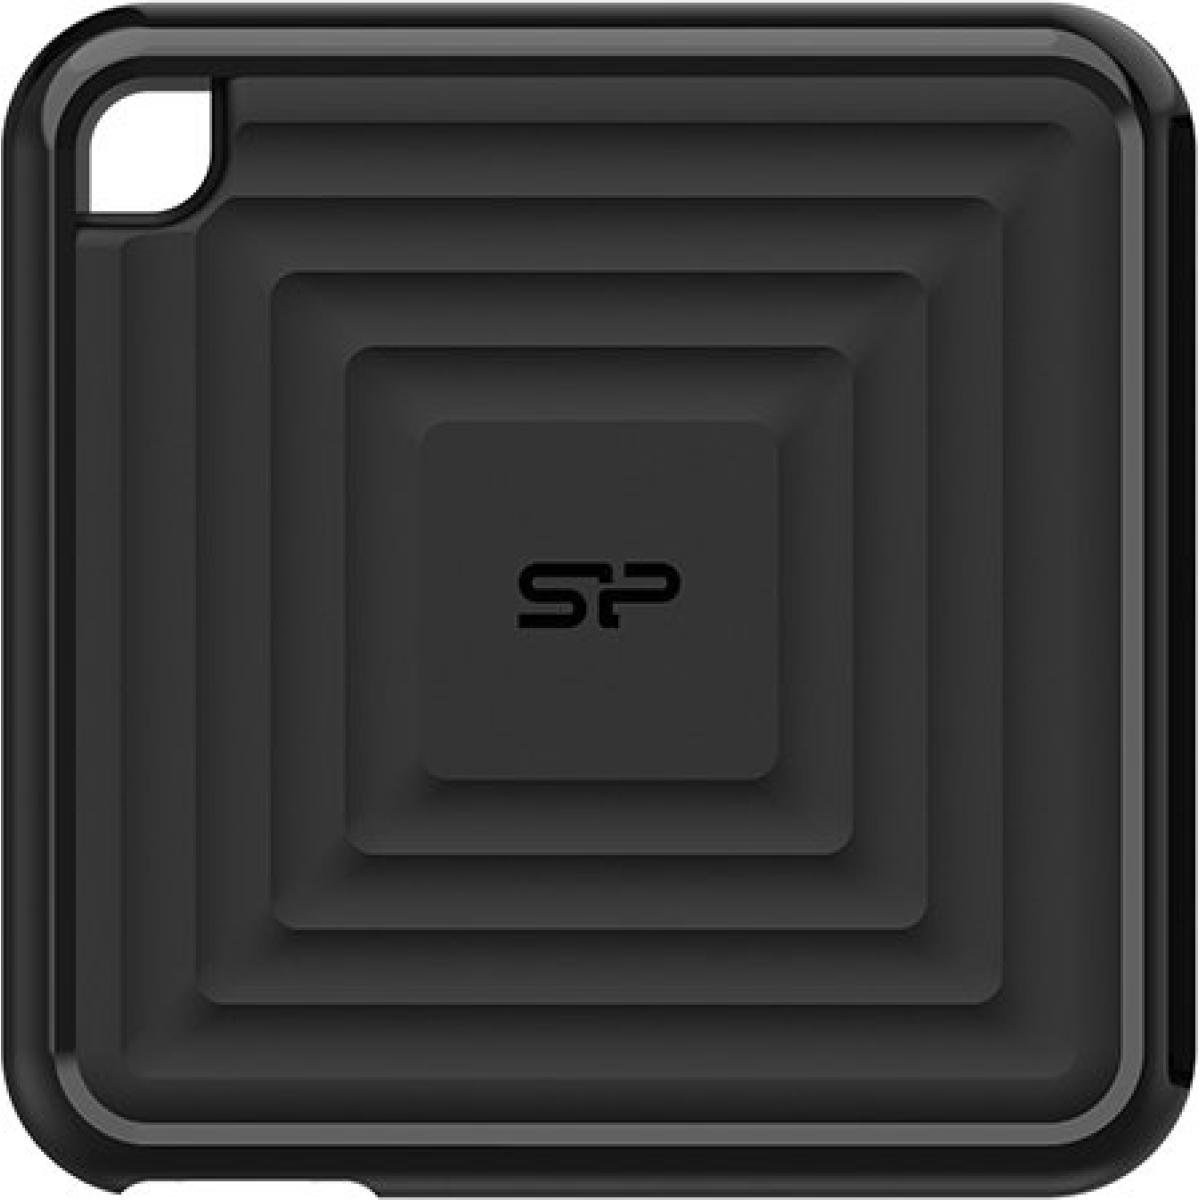 Silicon Power 240GB PC60 External SSD